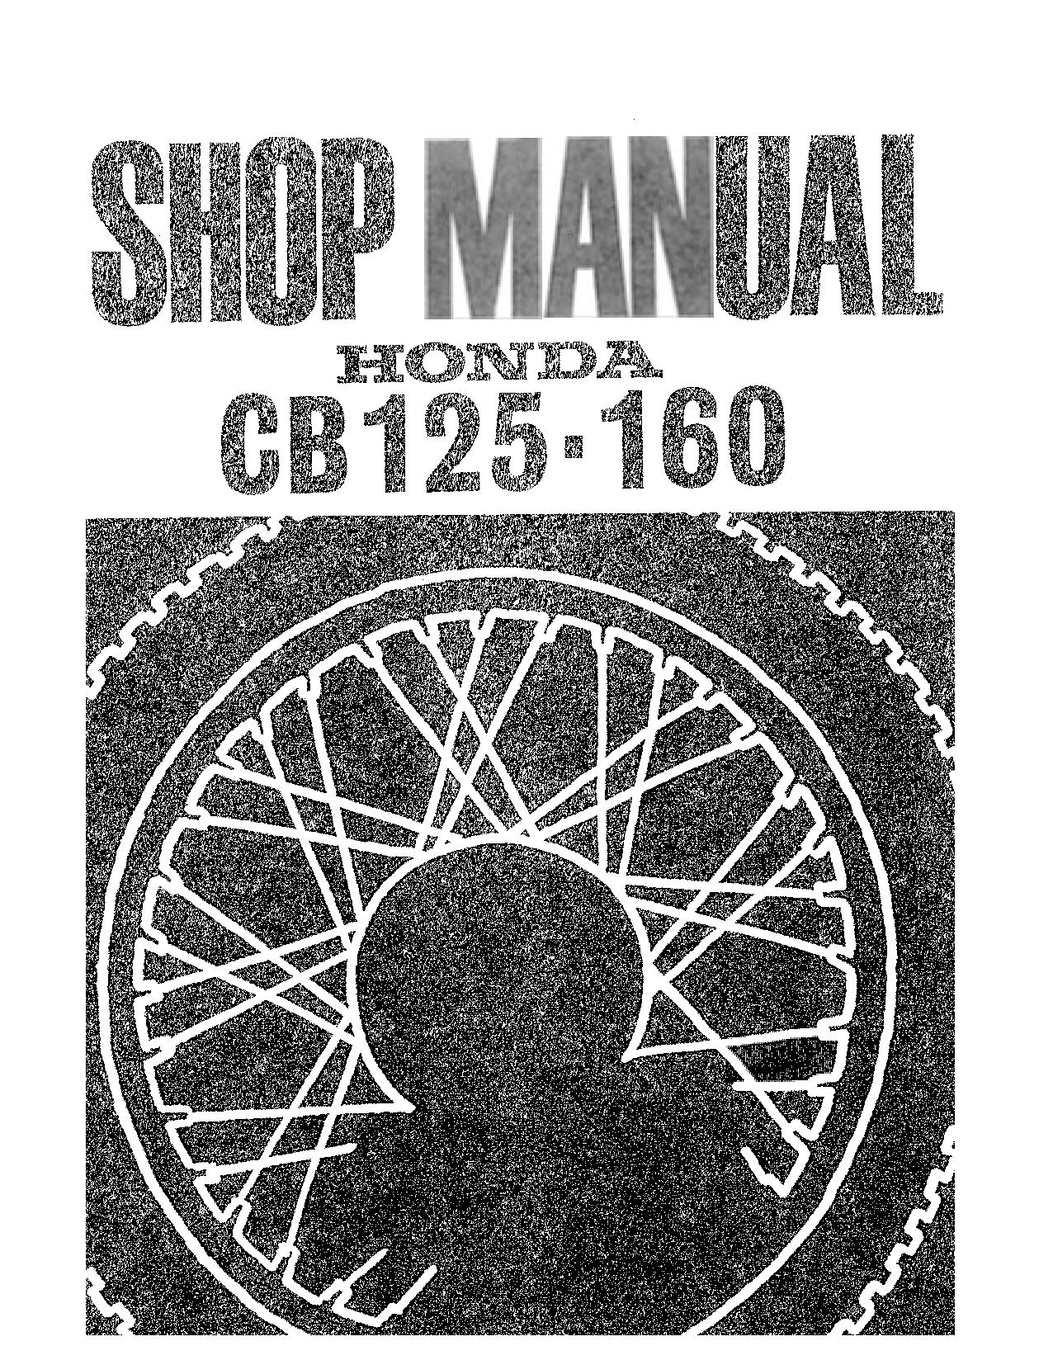 File:Honda CB125 Twin CB160 Workshop Service Repair Manual 1966-69.pdf